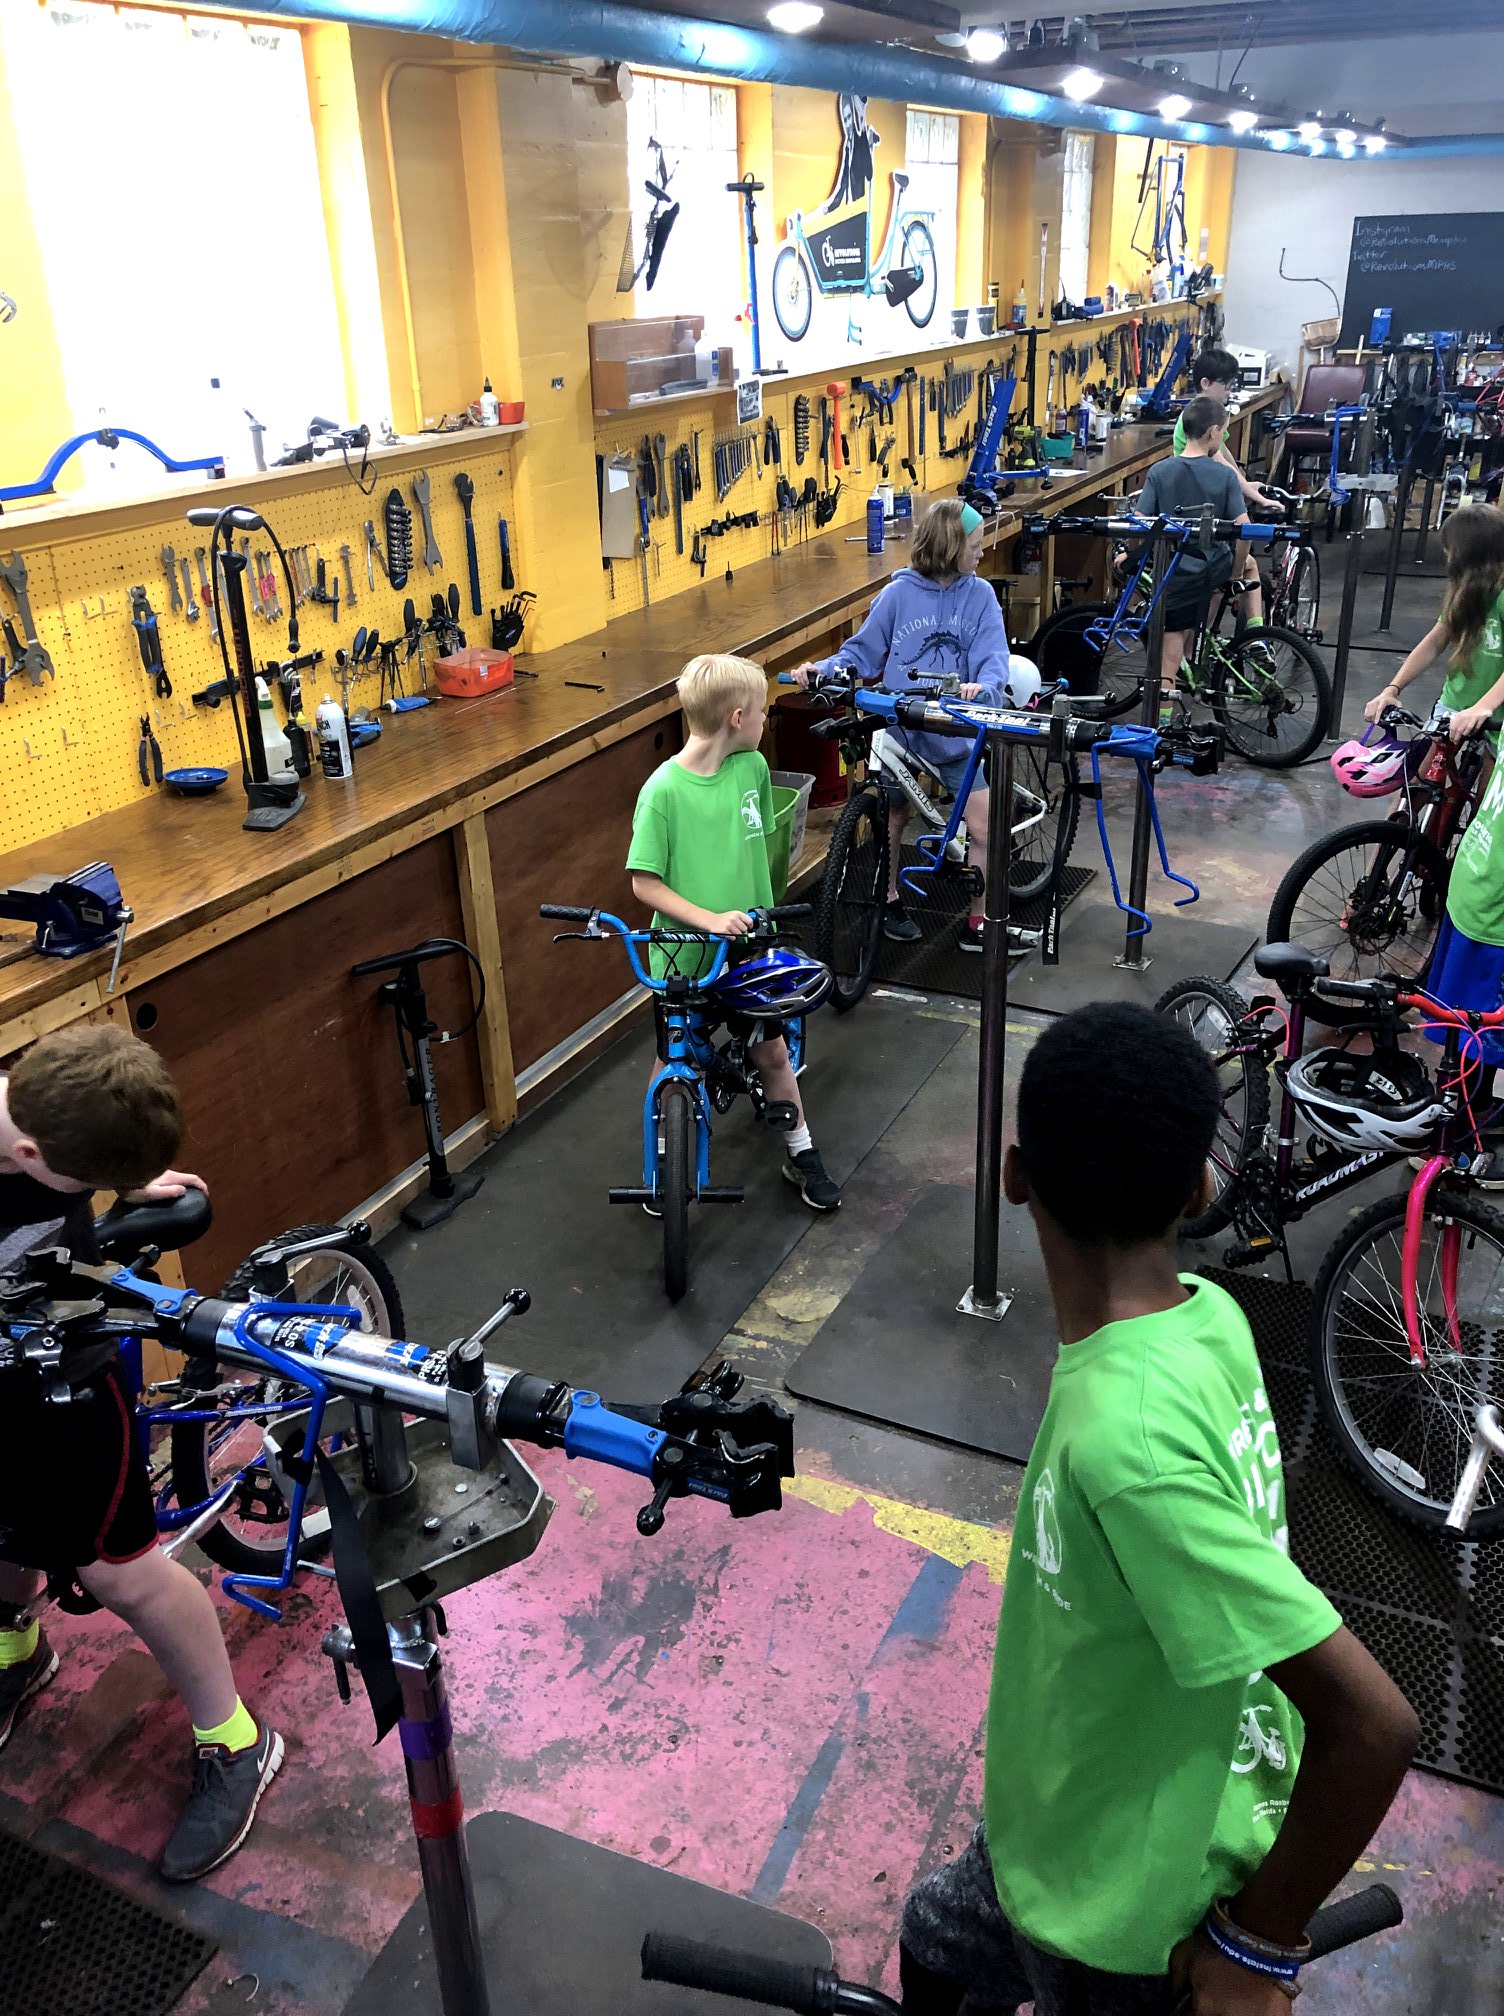 Kids at a bicycle repair workshop are repairing bikes in with shelves of bike tools behind them